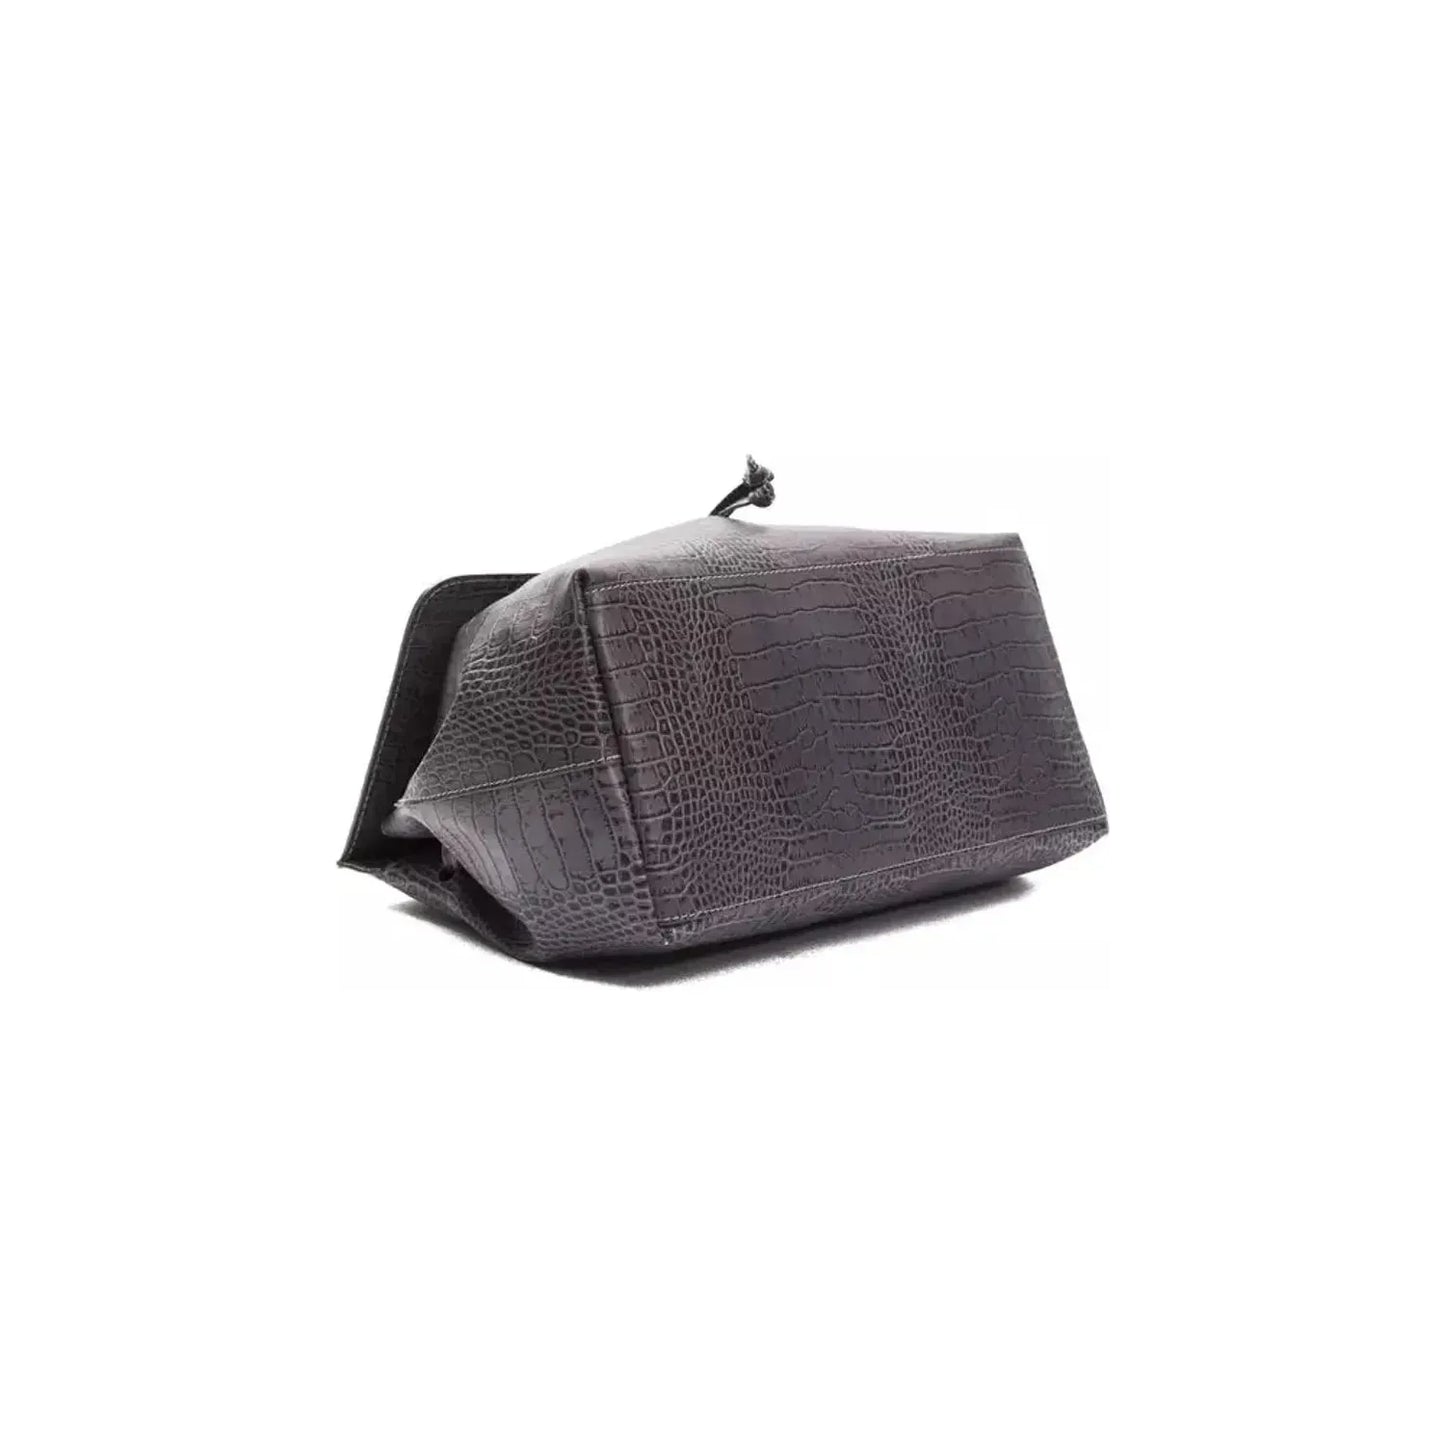 Pompei Donatella Convertible Croc-Print Leather Handbag gray-leather-handbag stock_product_image_5825_1208958415-26-297ee48a-1f1.webp